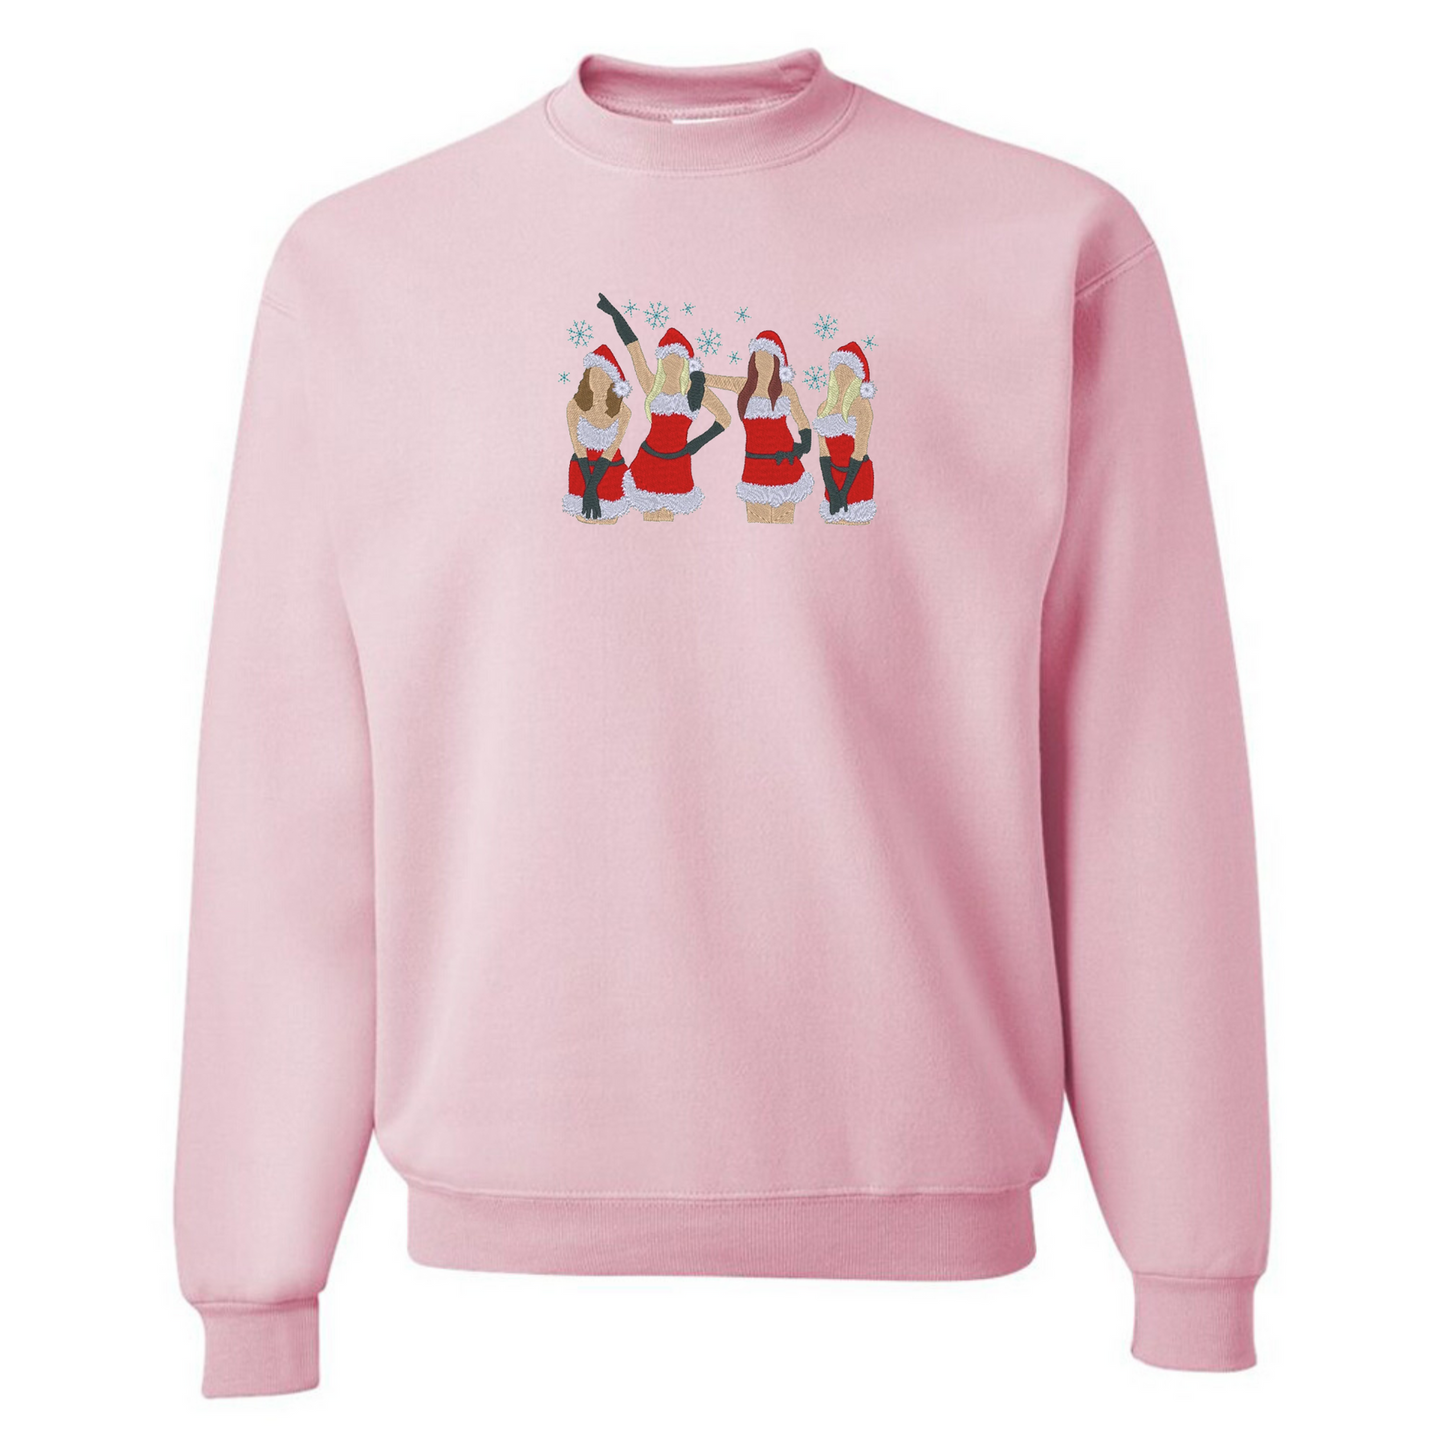 'Christmas Mean Girls' Embroidered Crewneck Sweatshirt